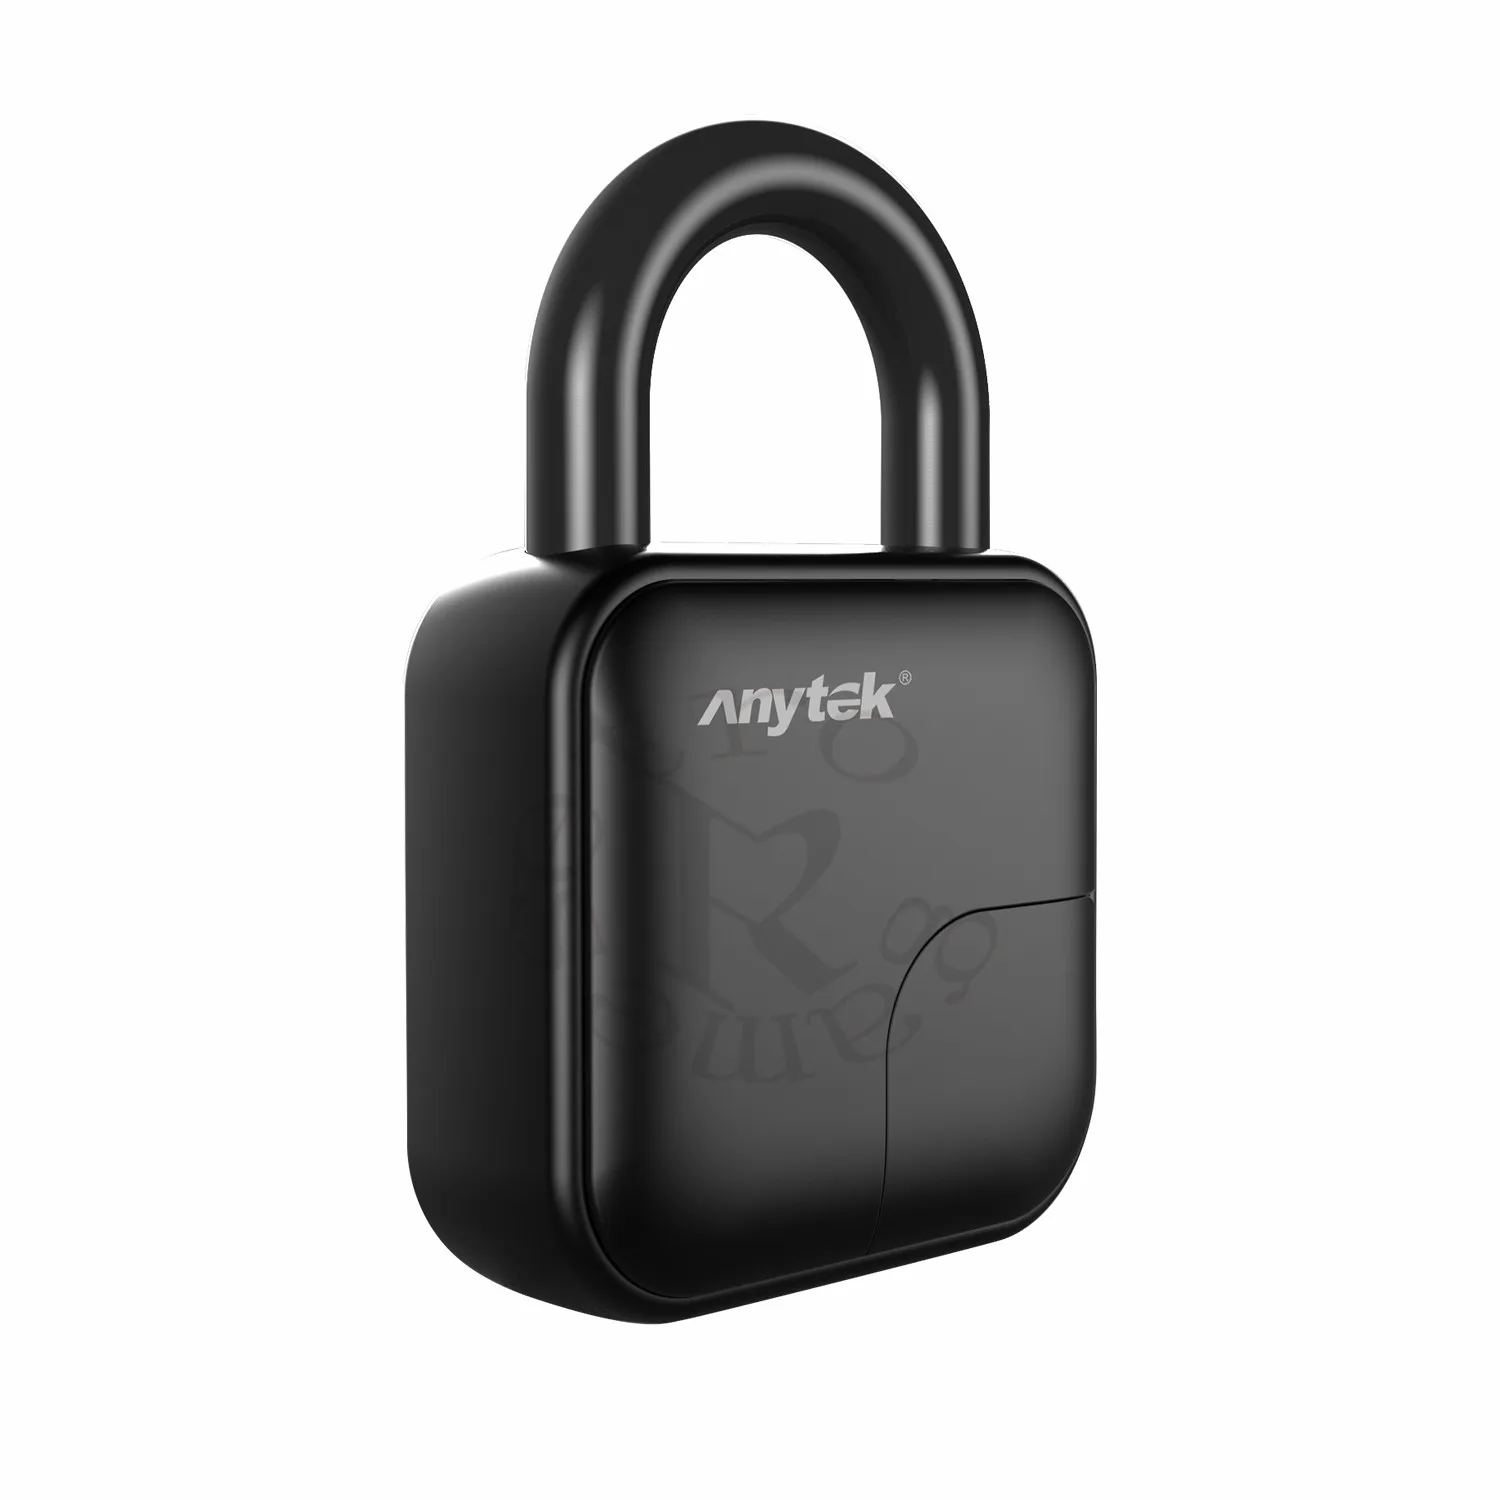 

L3 USB Rechargeable Smart Lock Keyless Fingerprint Lock IP65 Waterproof Anti-Theft Security Padlock Door Luggage Case Lock